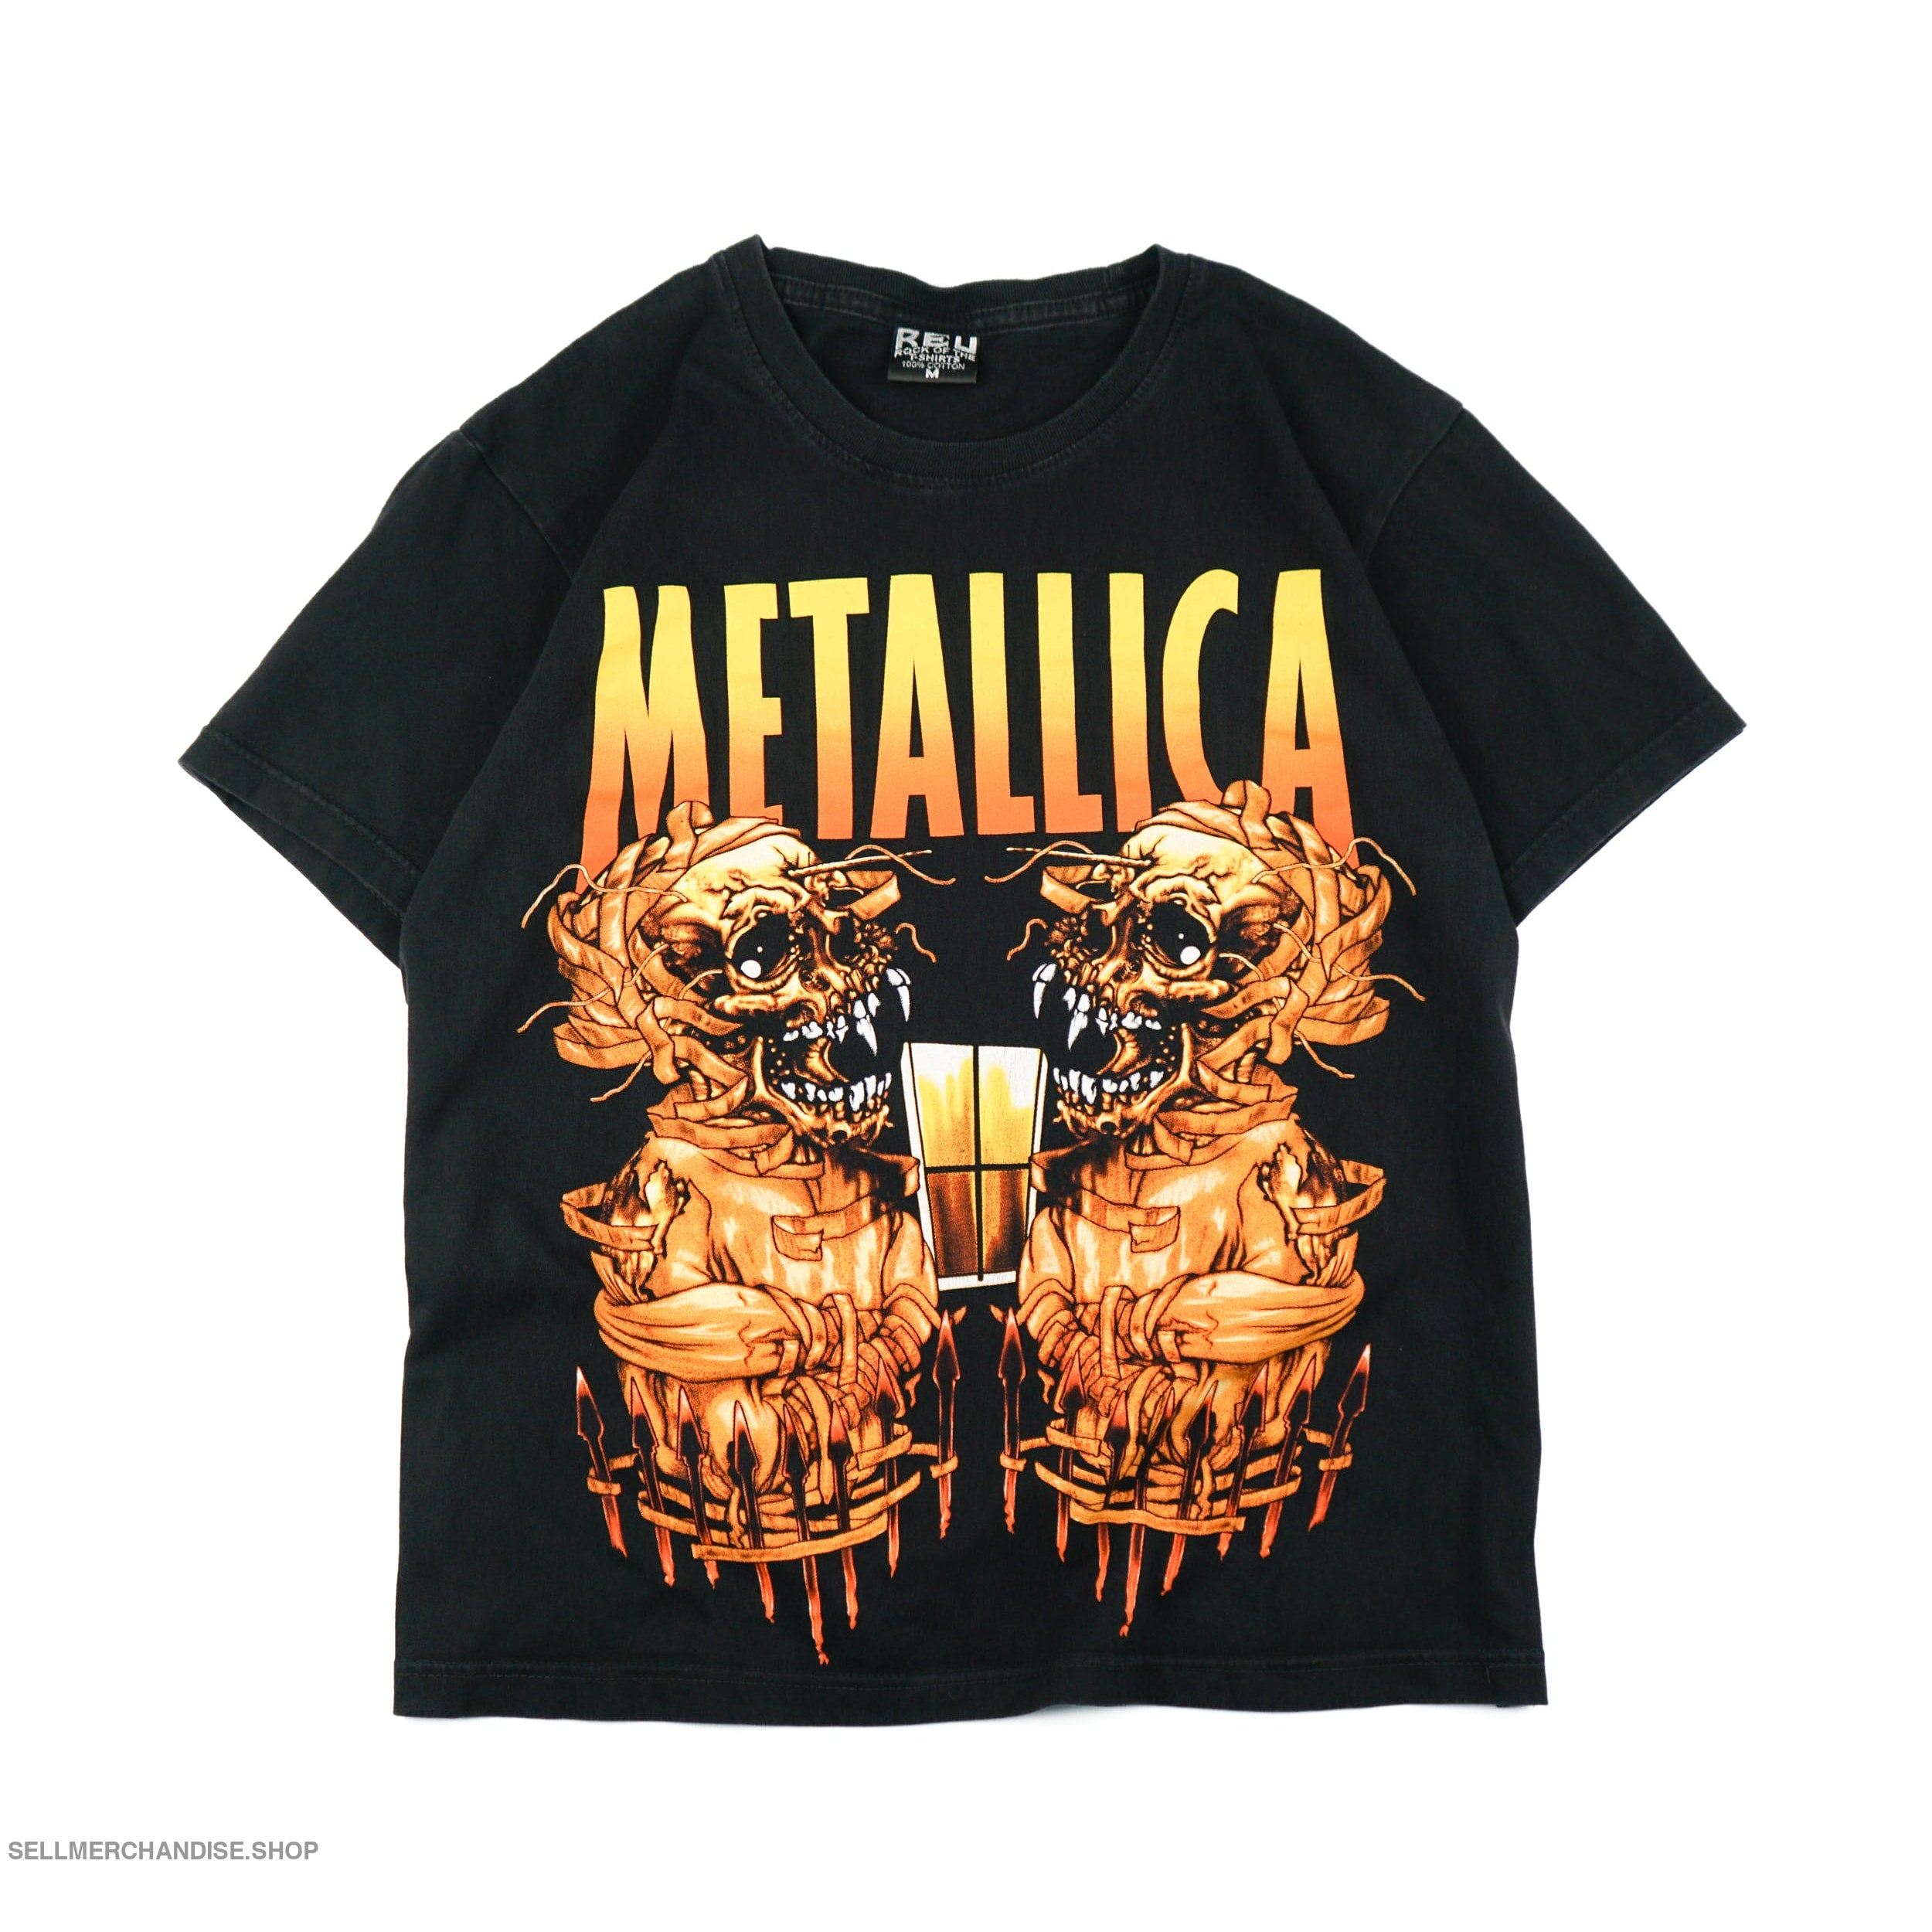 Vintage Metallica T-Shirts Collection | SellMerchandise